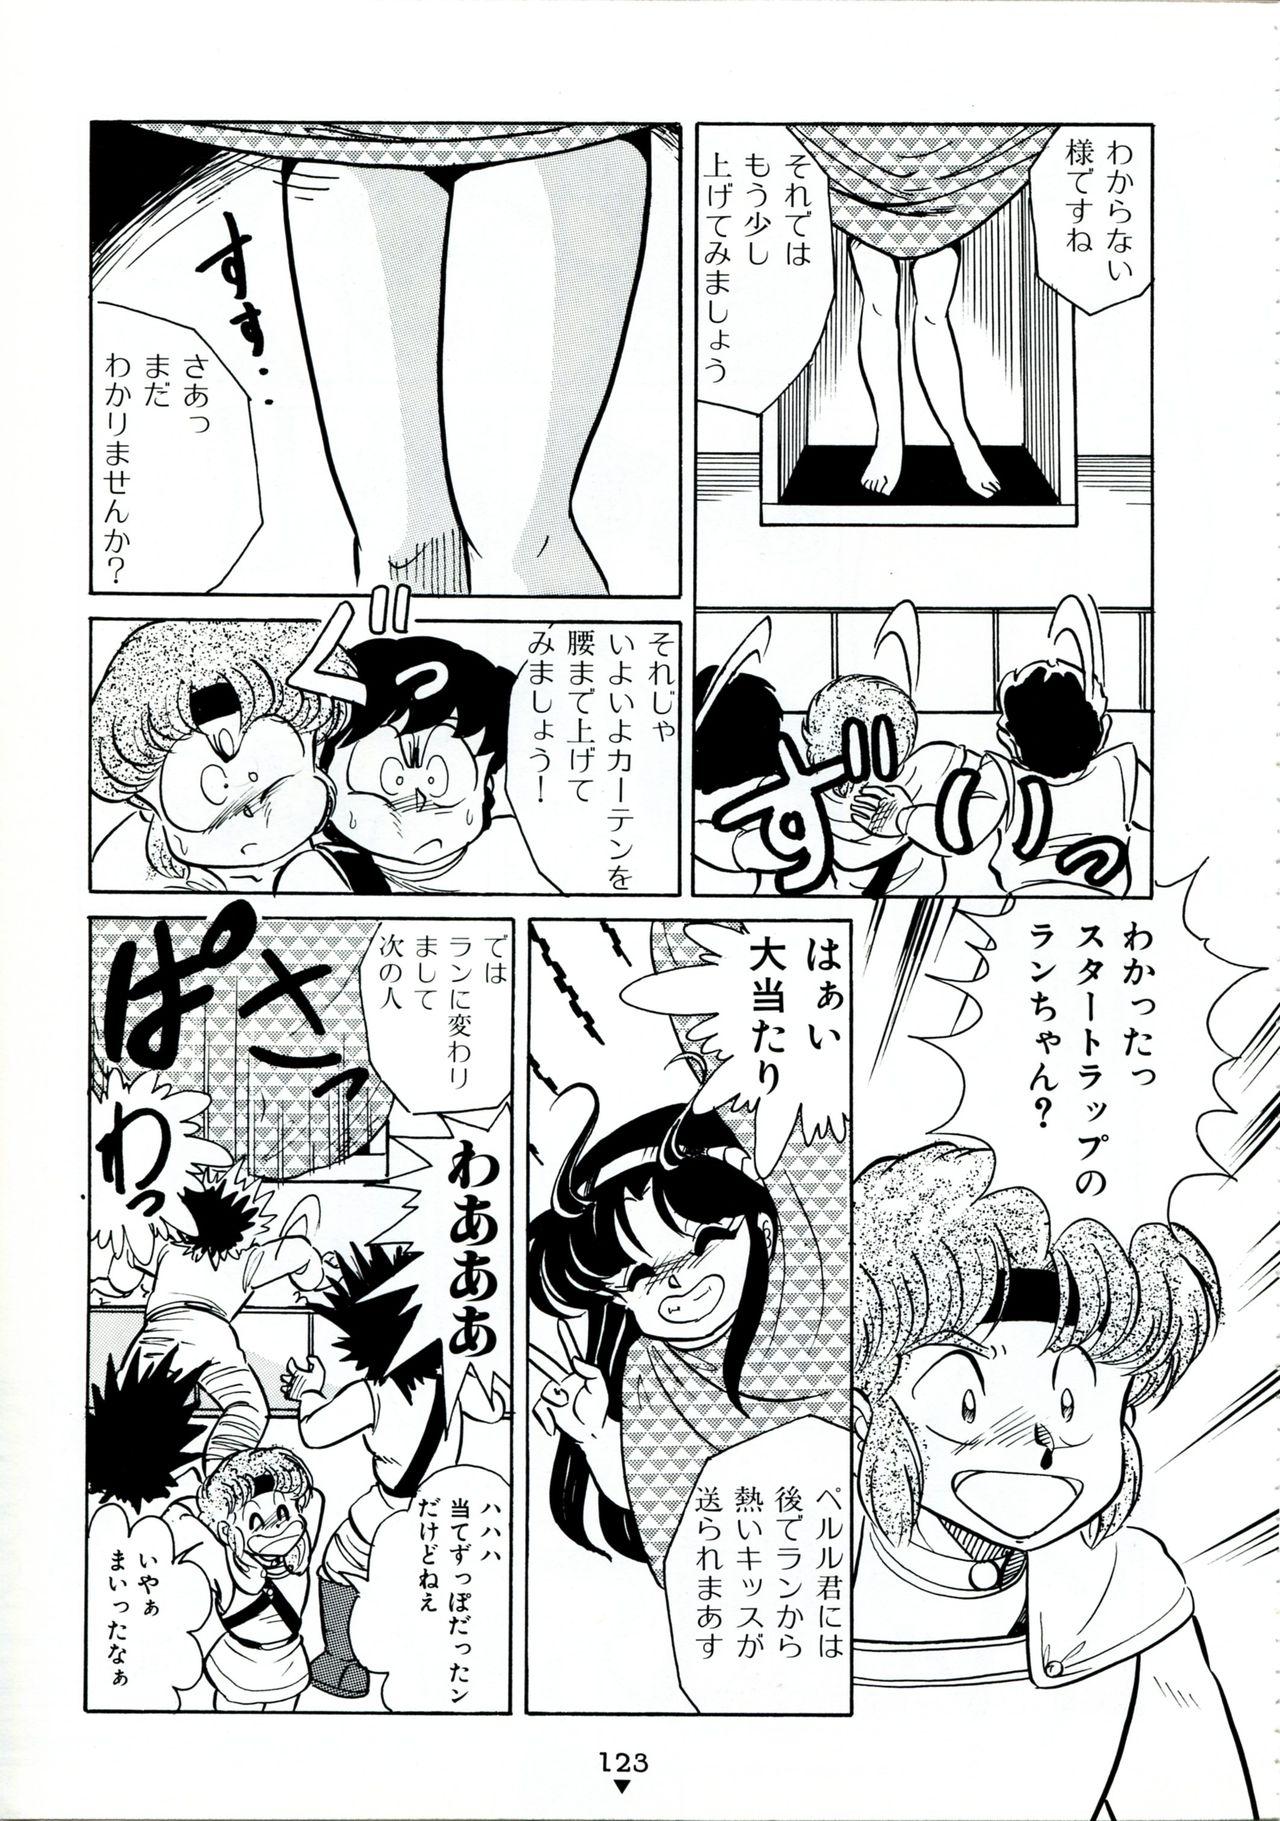 Bishoujo Anime Daizenshuu - Adult Animation Video Catalog 1991 118